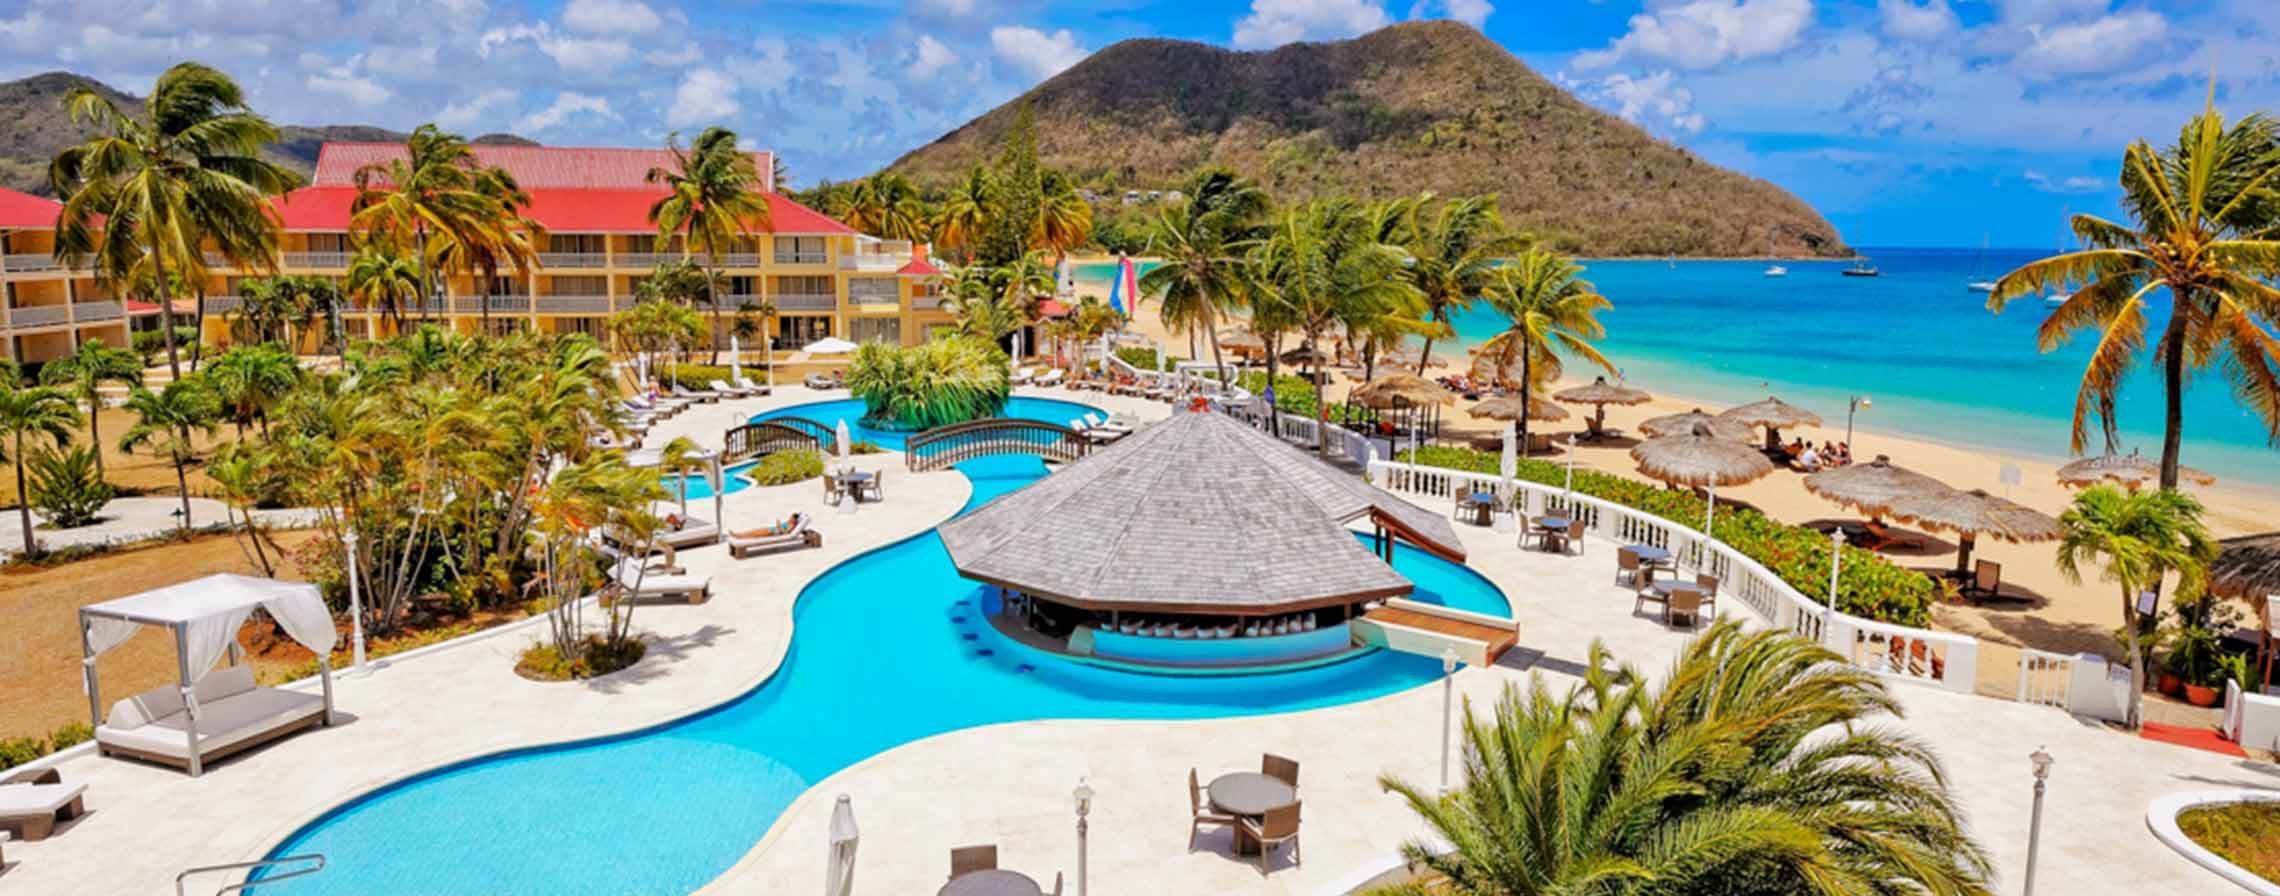 Property image of Mystique Royal St. Lucia Resort & Spa